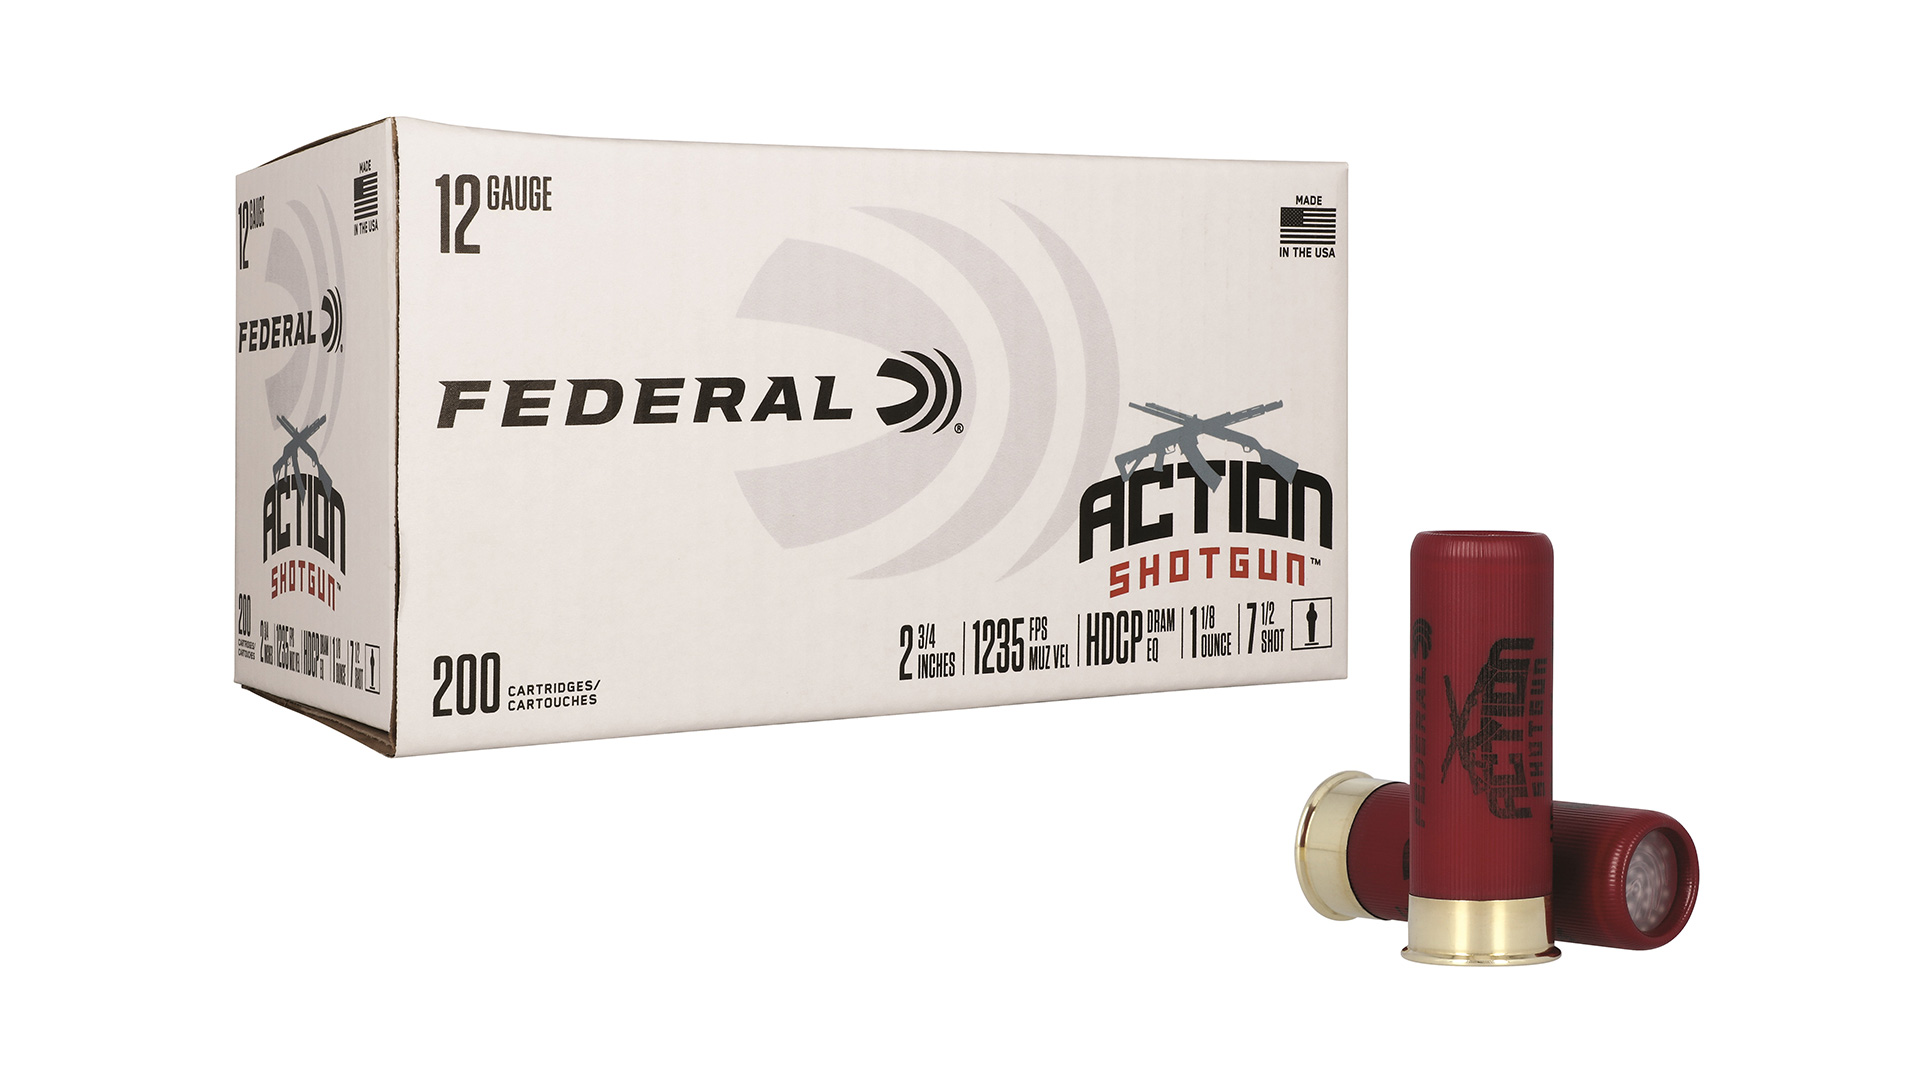 Federal Action Shotgun